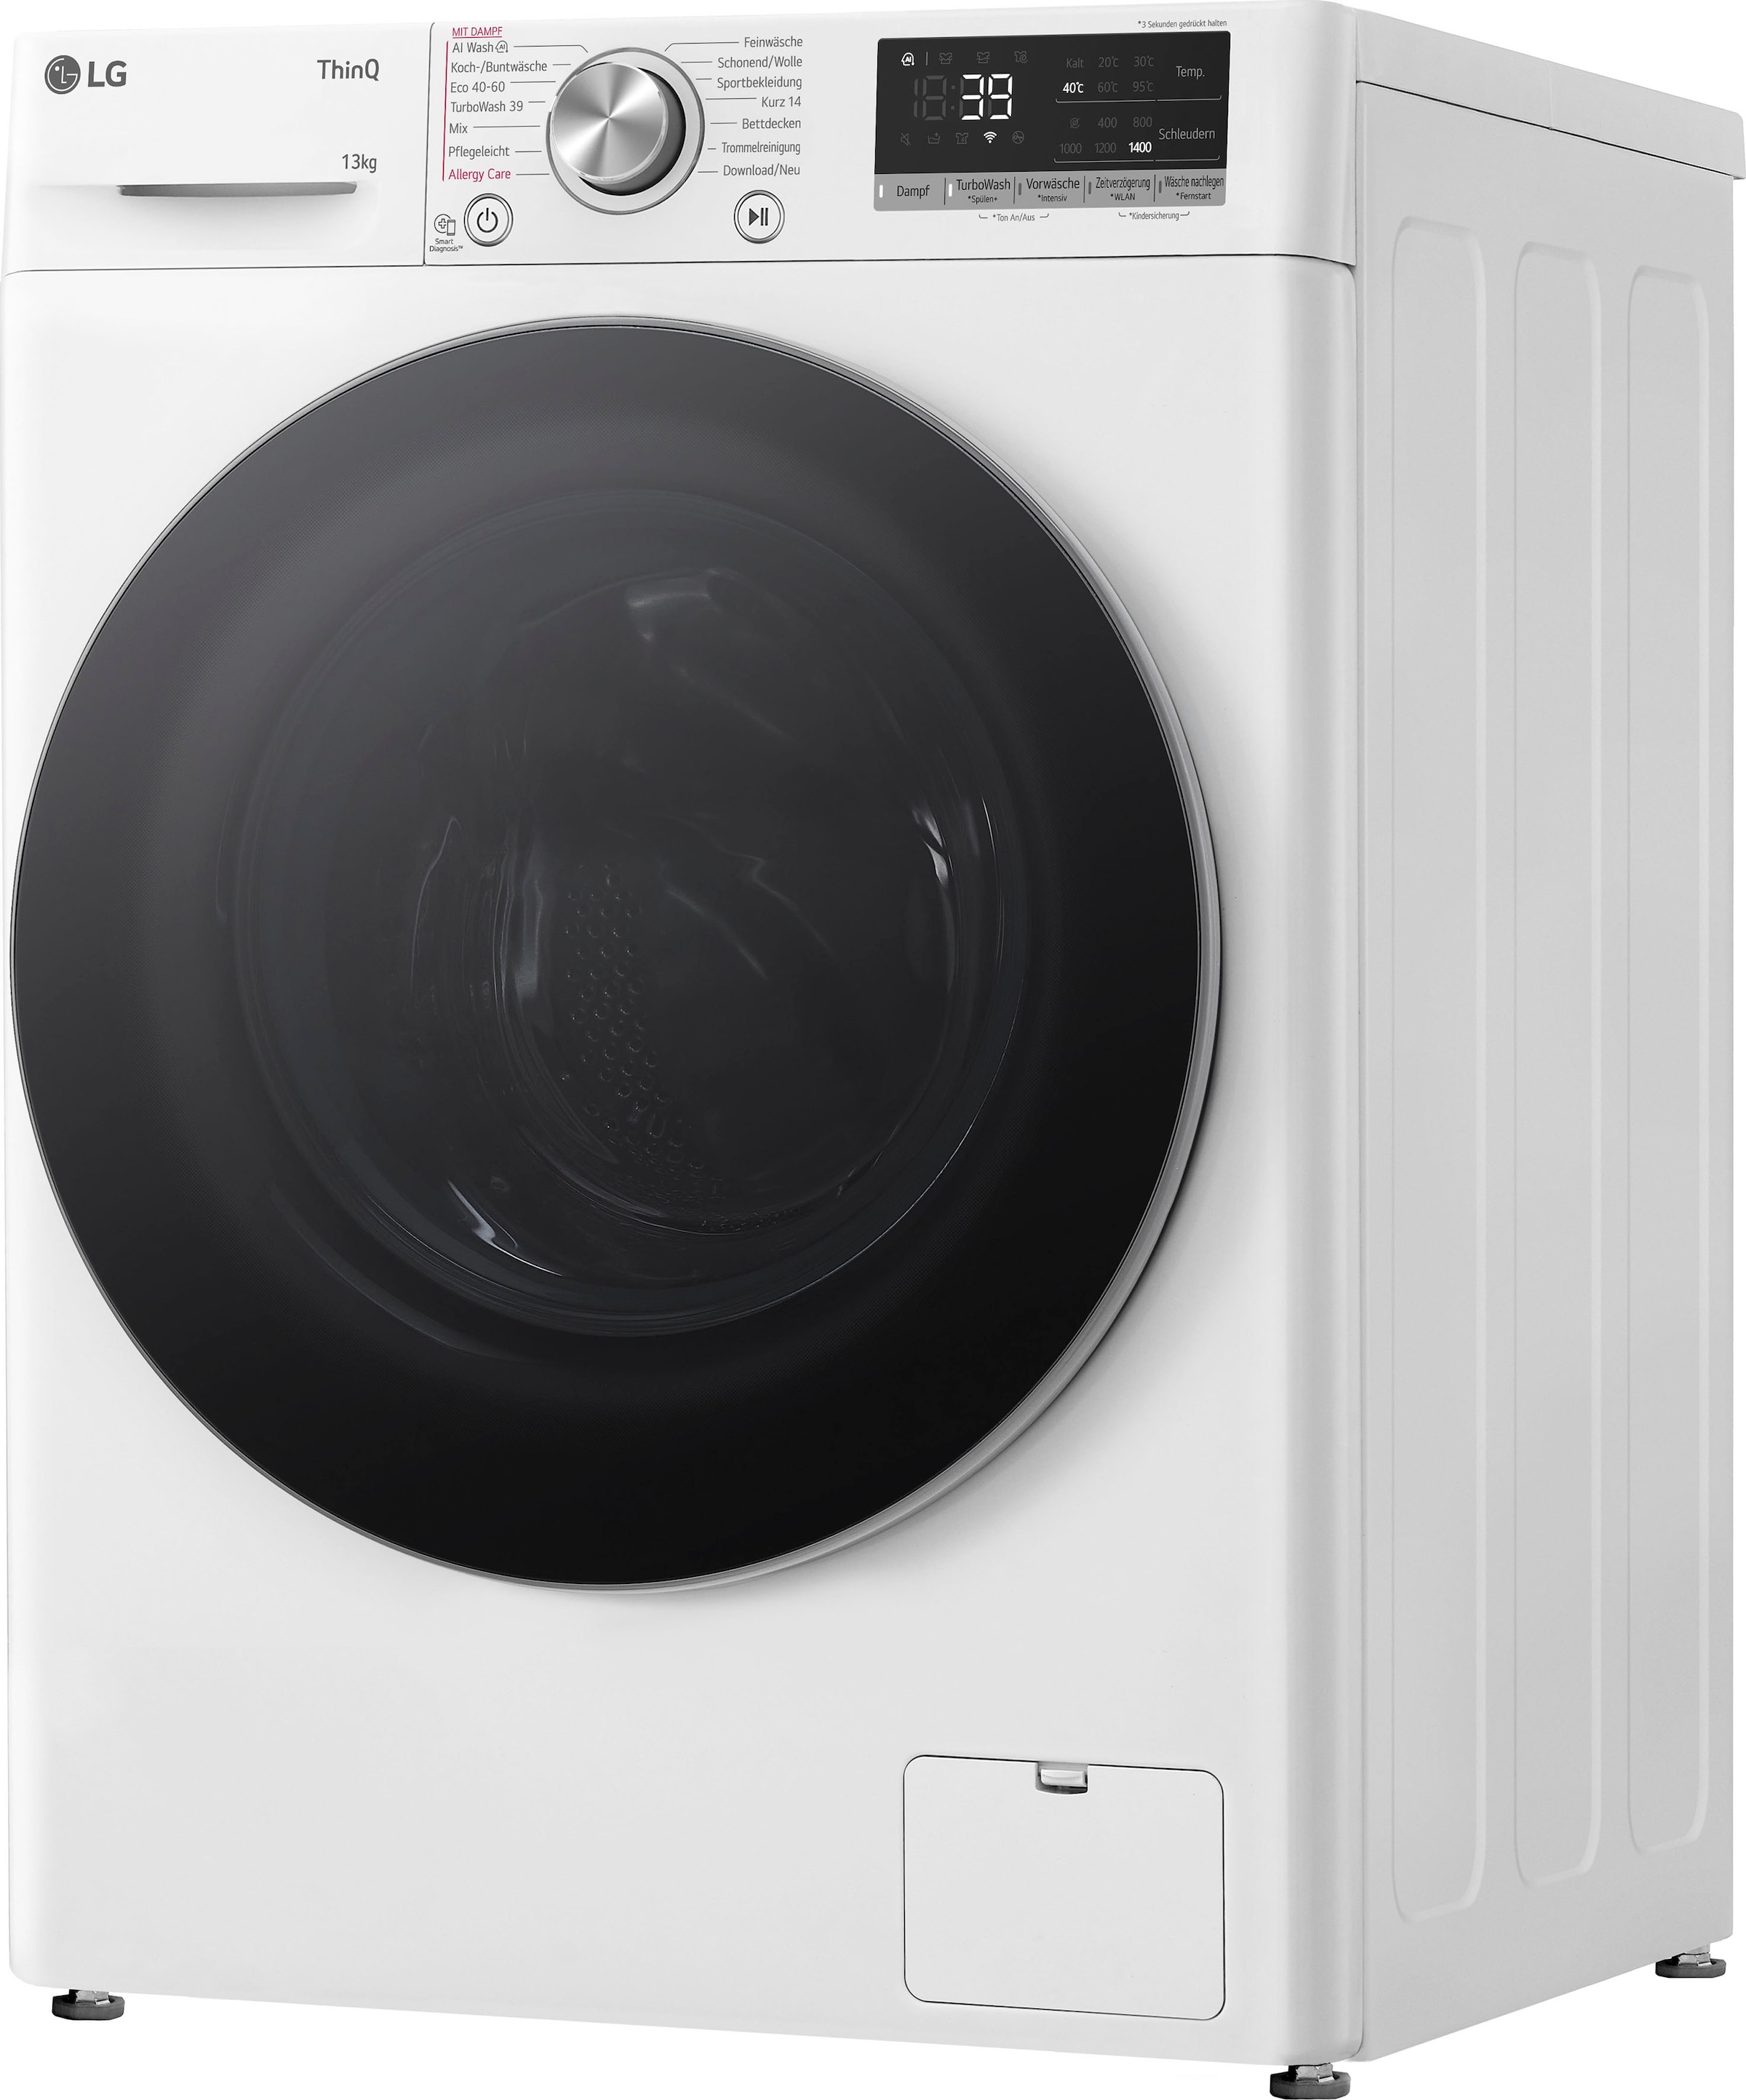 LG Waschmaschine »F4WR7031«, Serie 7, 13 per kg, F4WR7031, 1400 U/min | BAUR Rechnung